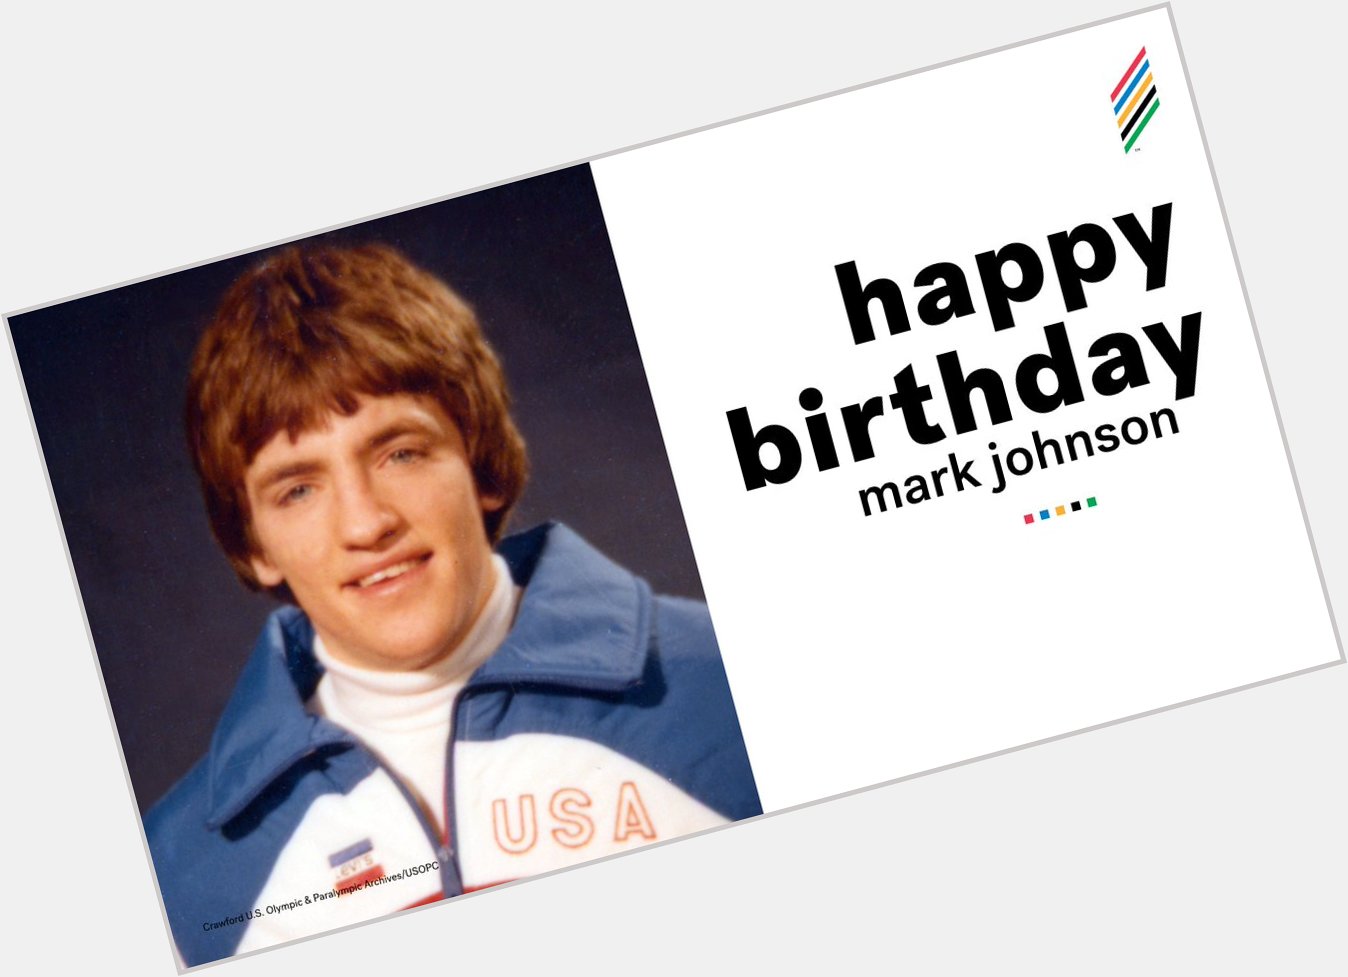 Happy birthday to Mark Johnson!

Mark was a member of the  